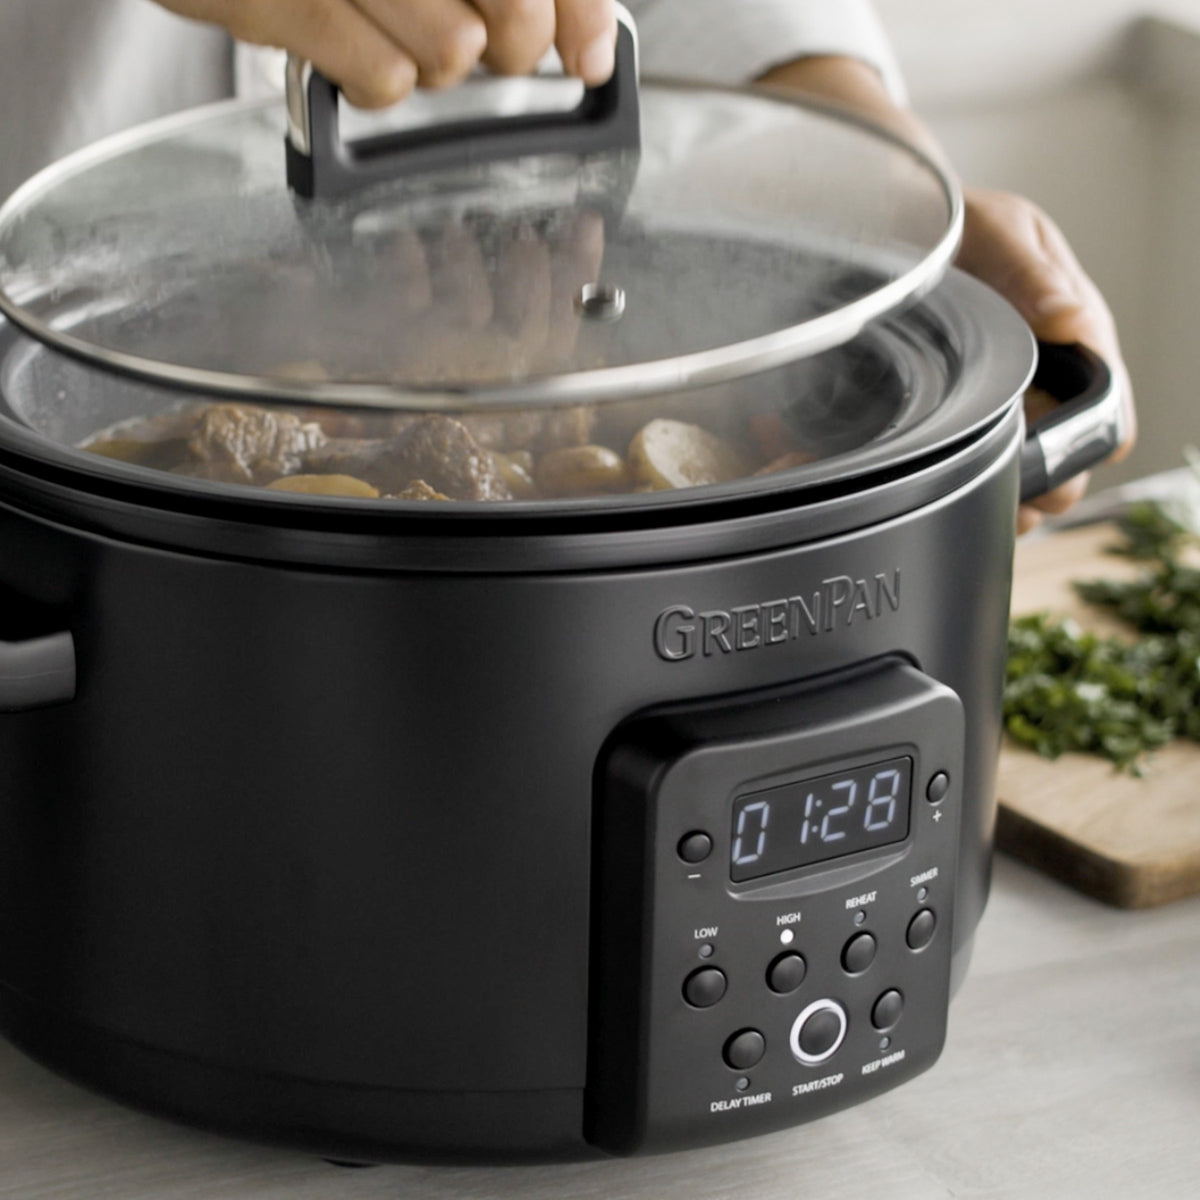 Crock-Pot 4 Quart Digital Count Down Food Slow Cooker Kitchen Appliance,  Black, 1 Piece - Food 4 Less